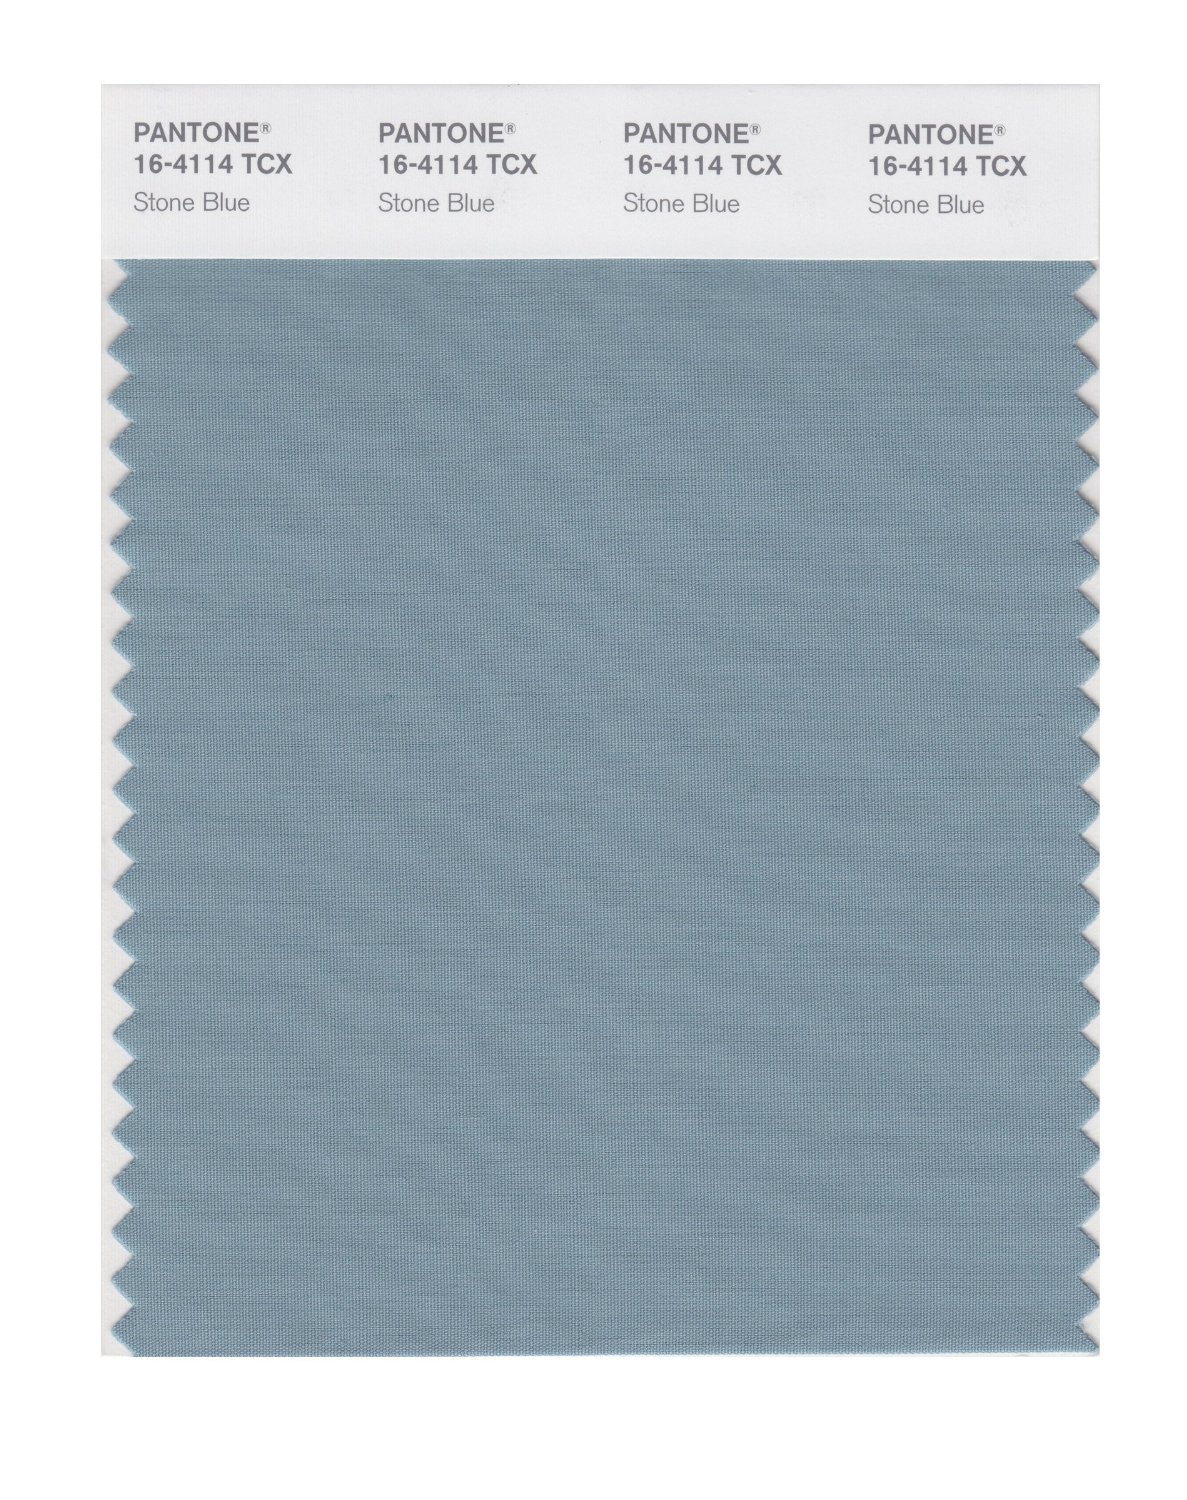 Pantone Cotton Swatch 16-4114 Stone Blue